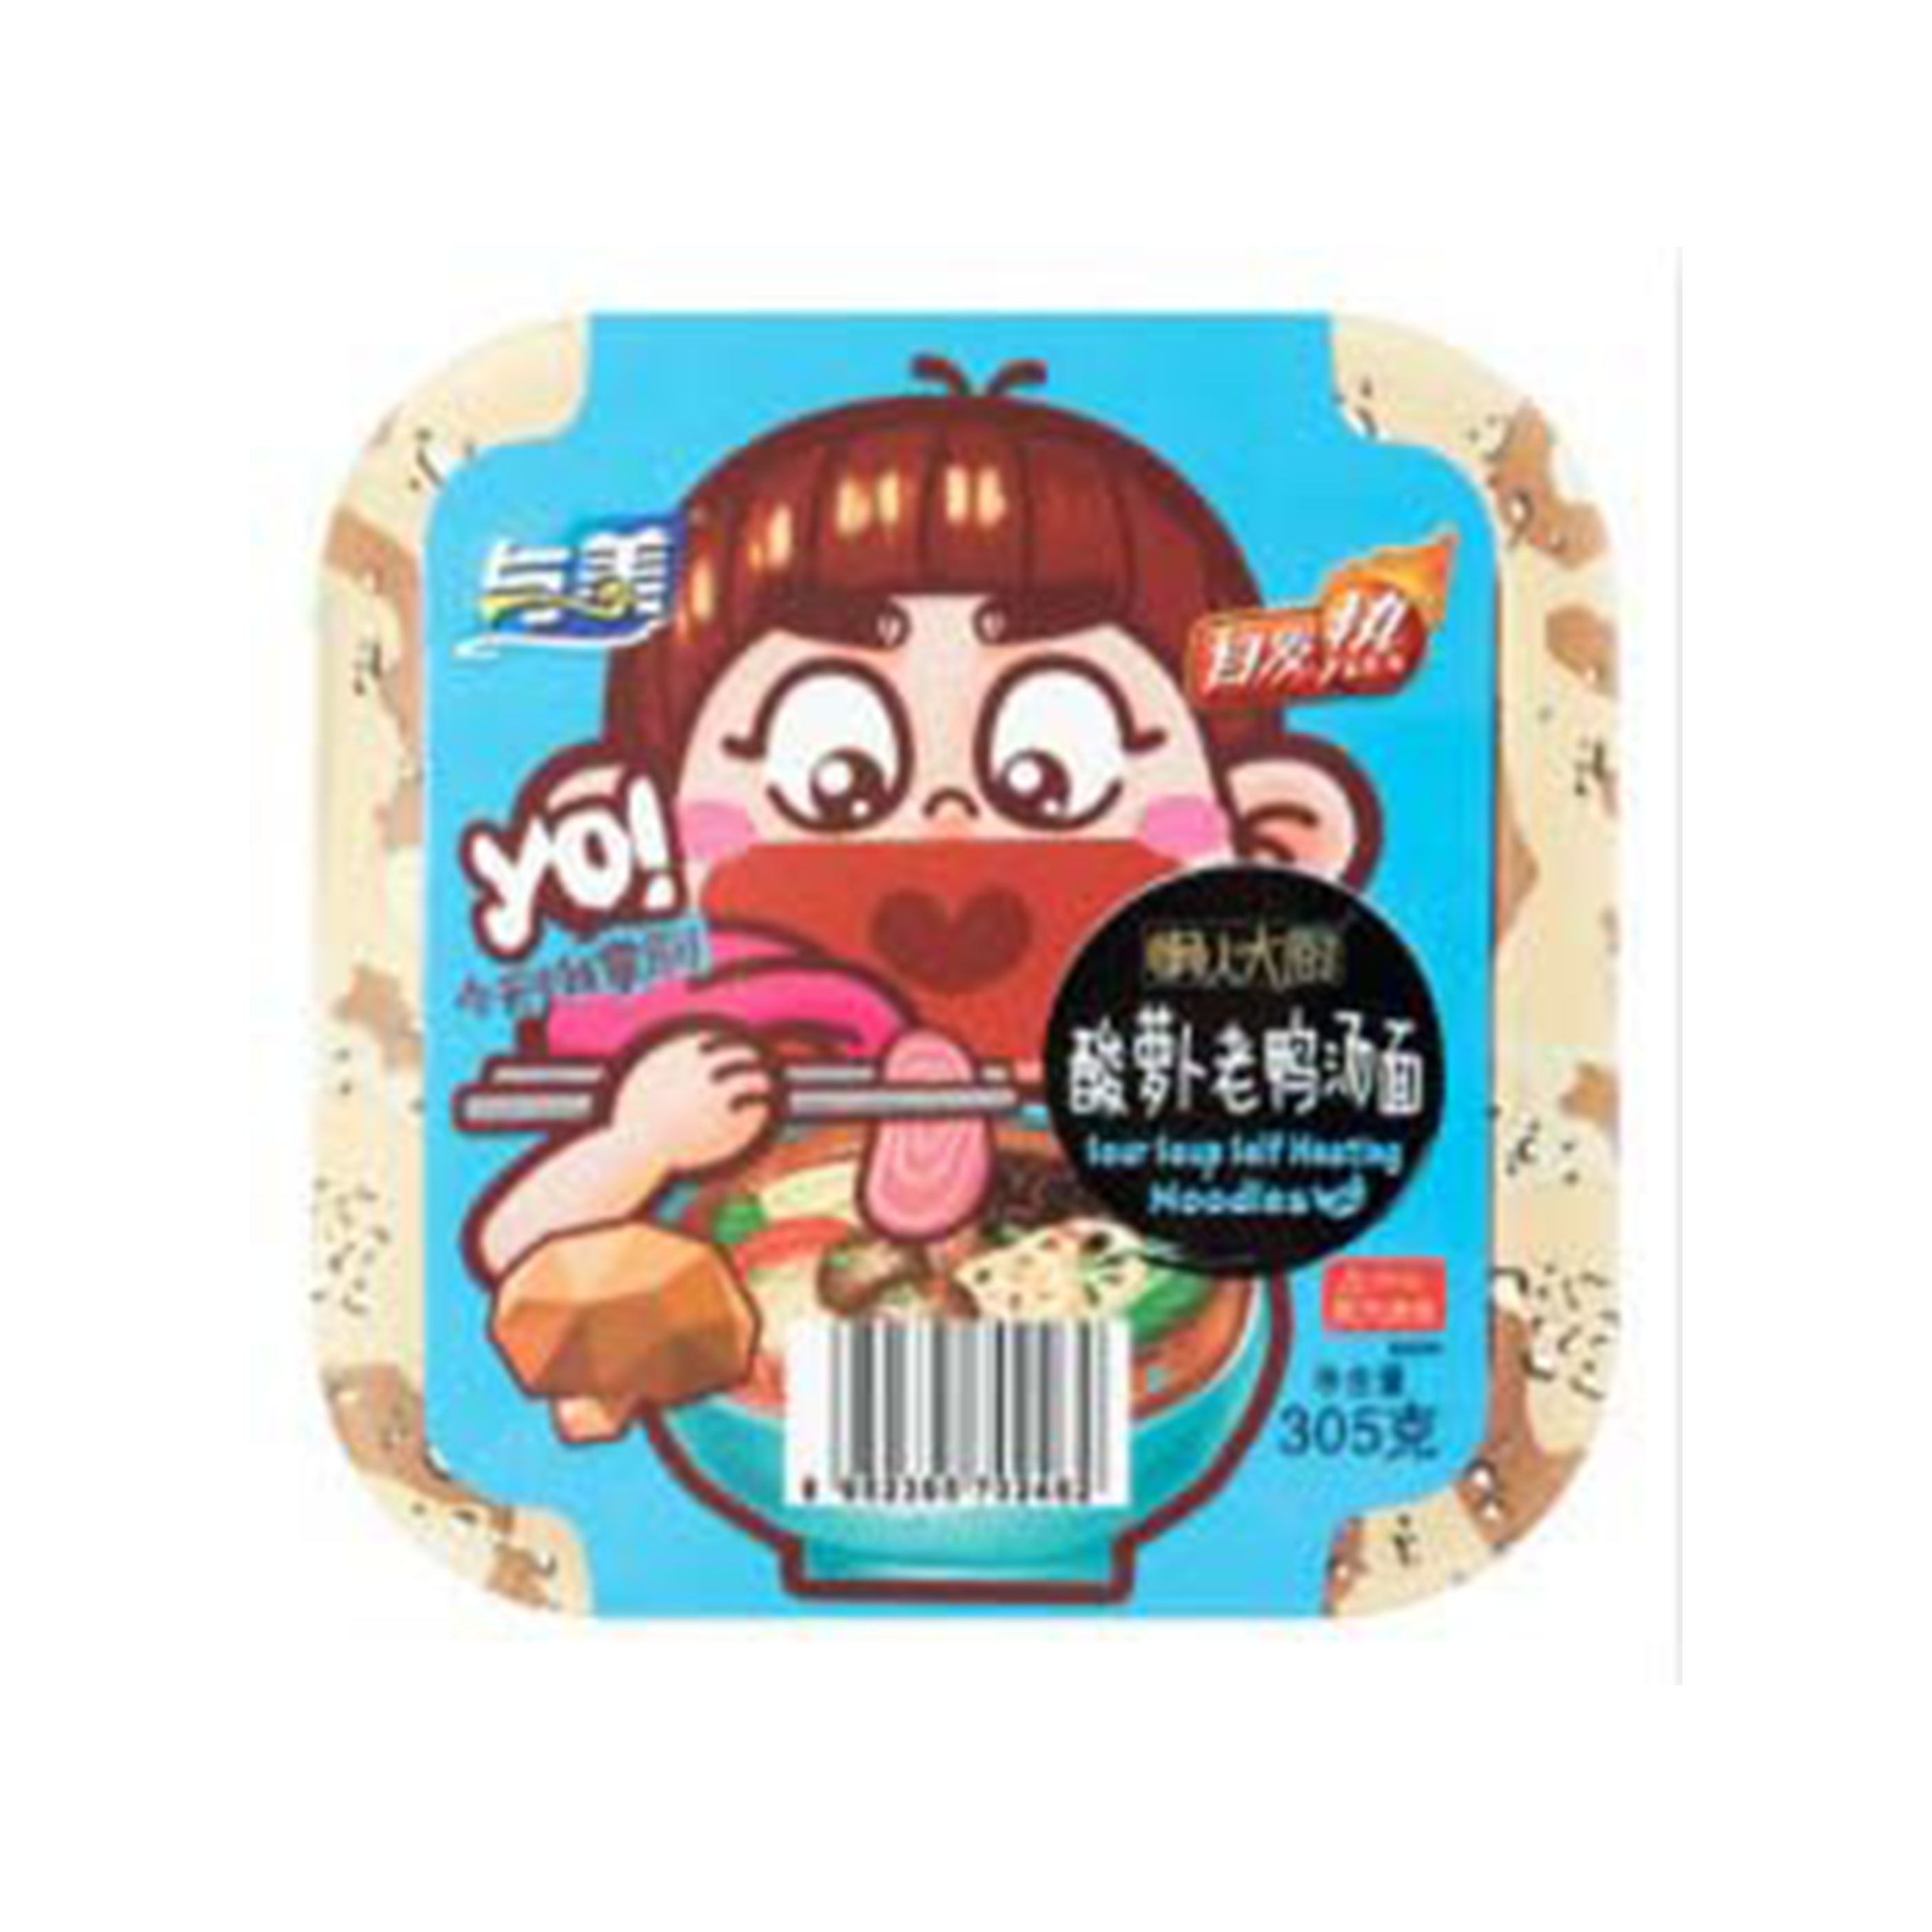 2902: Yumei Instant Sour Turnip Duck Vermicelli Hot Pot - THE RAMEN RATER